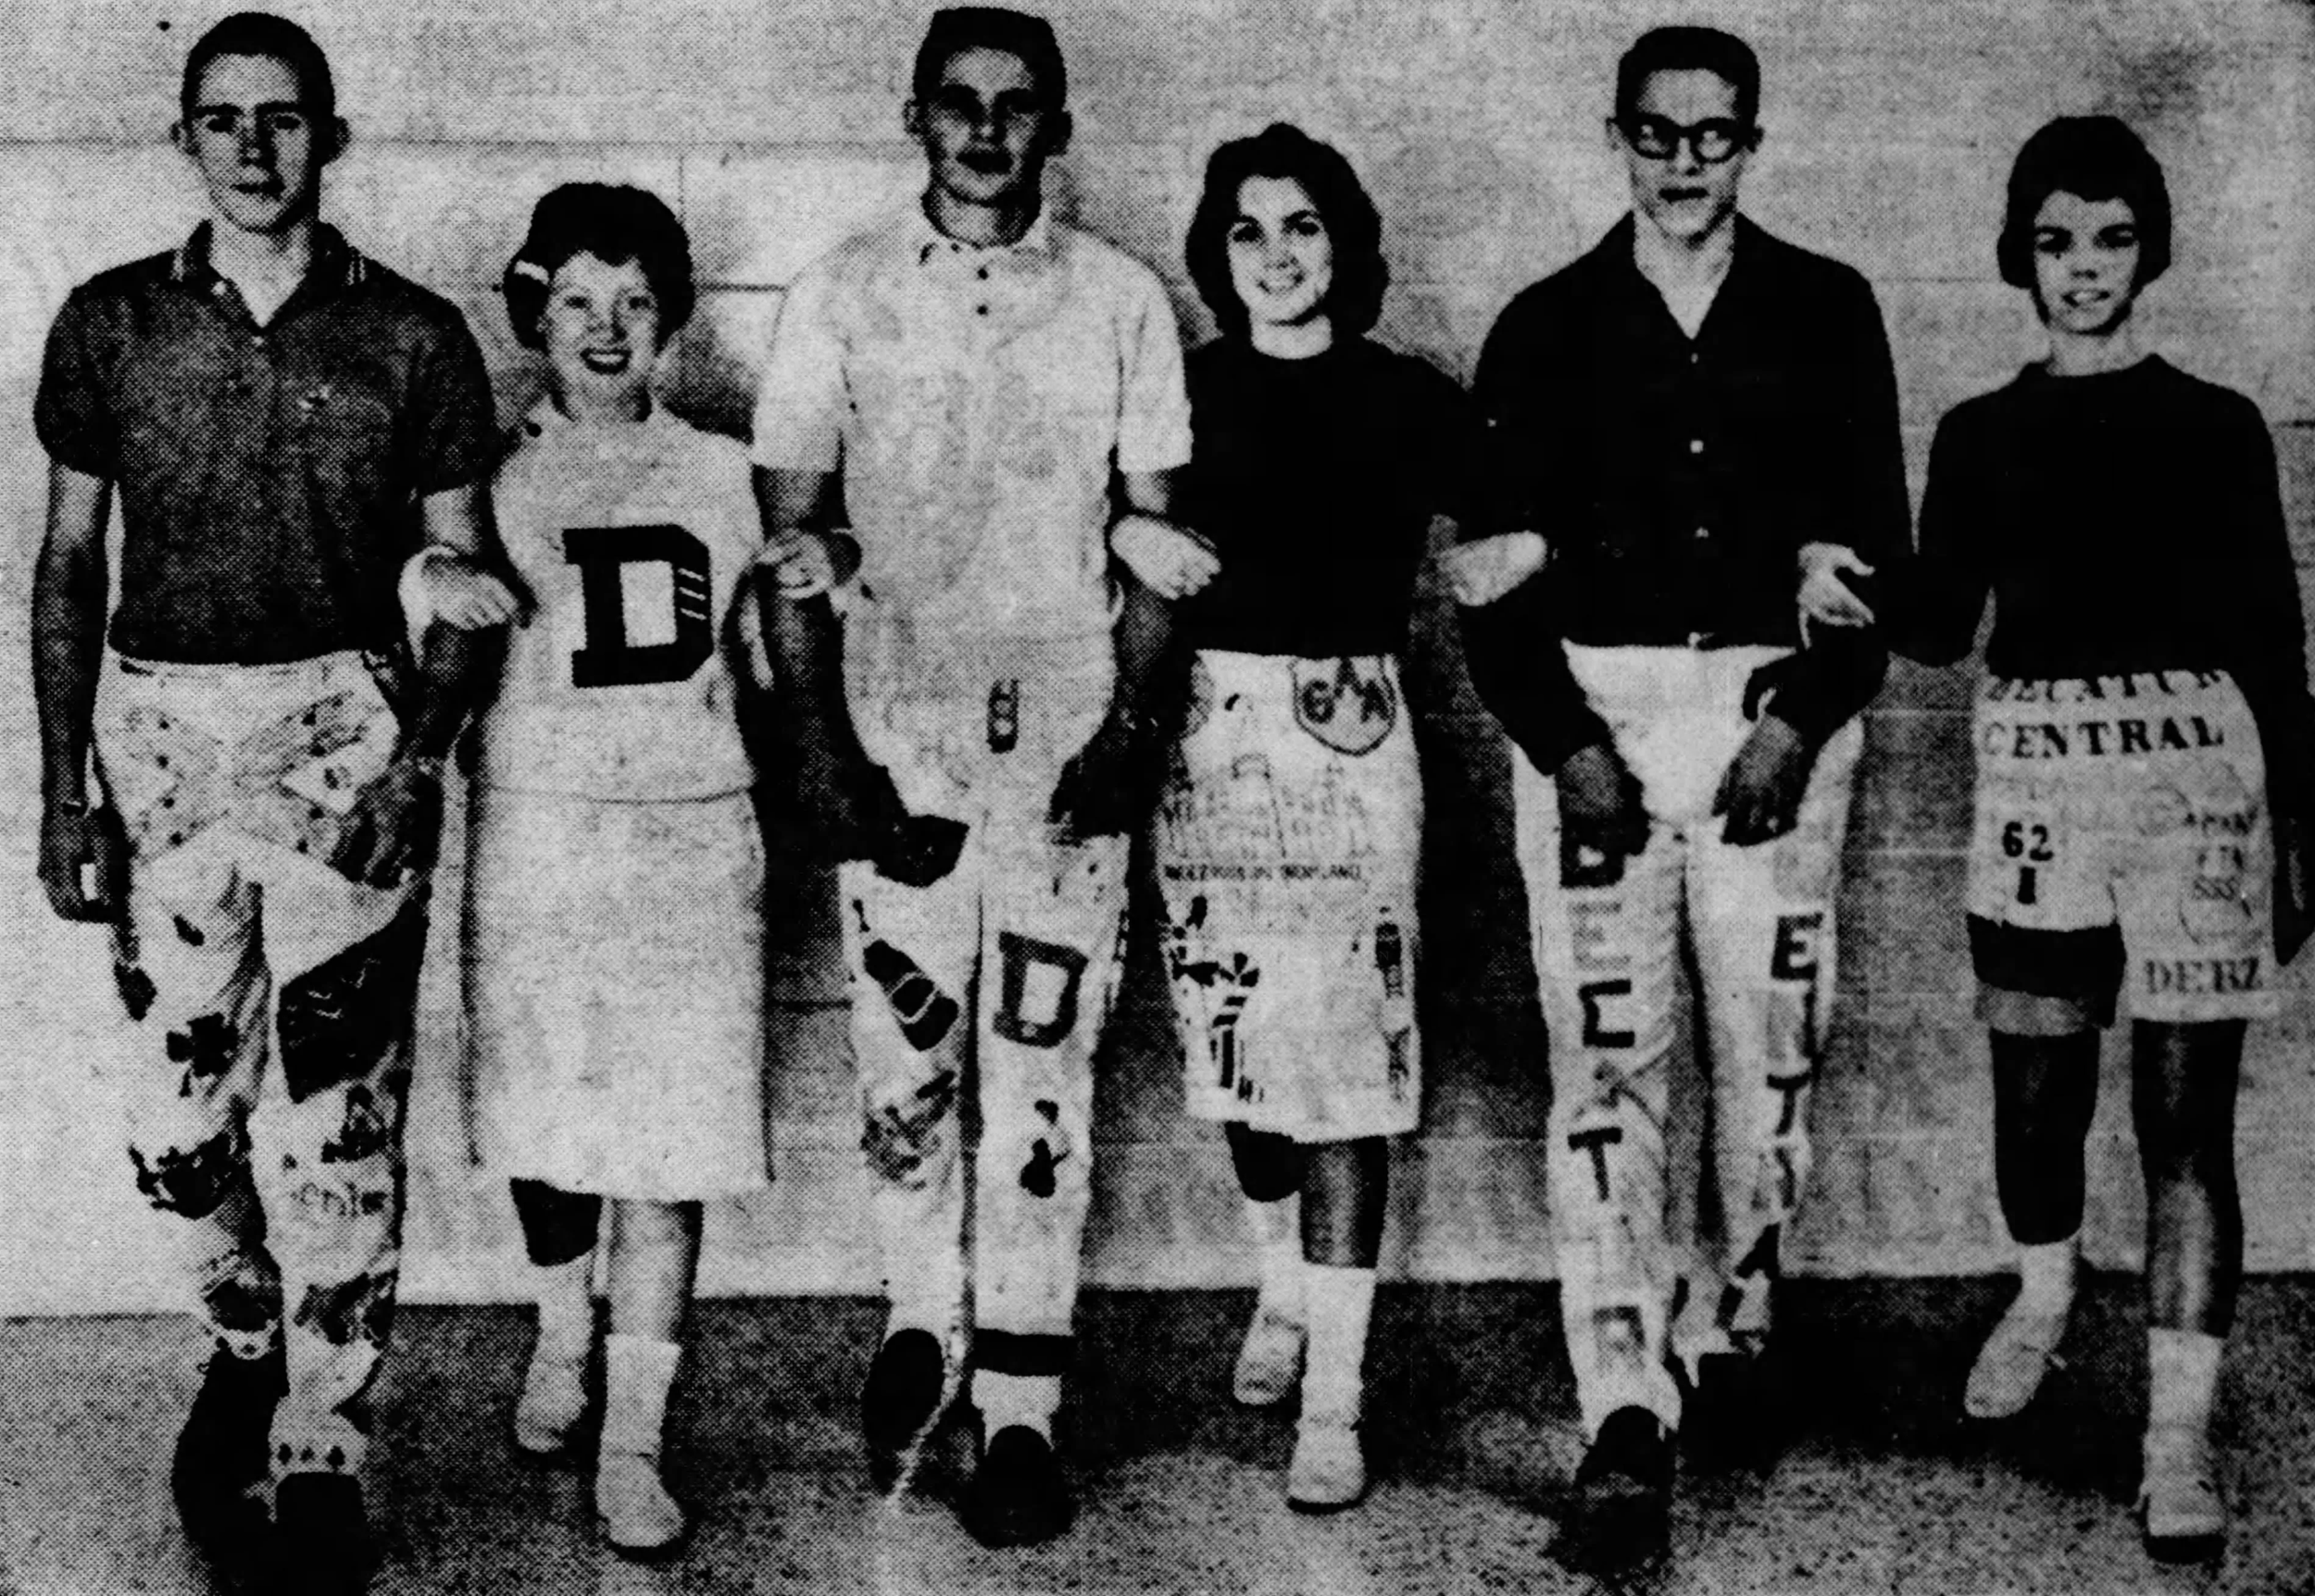  Vintage senior cords, Purdue University, circa 1962. 